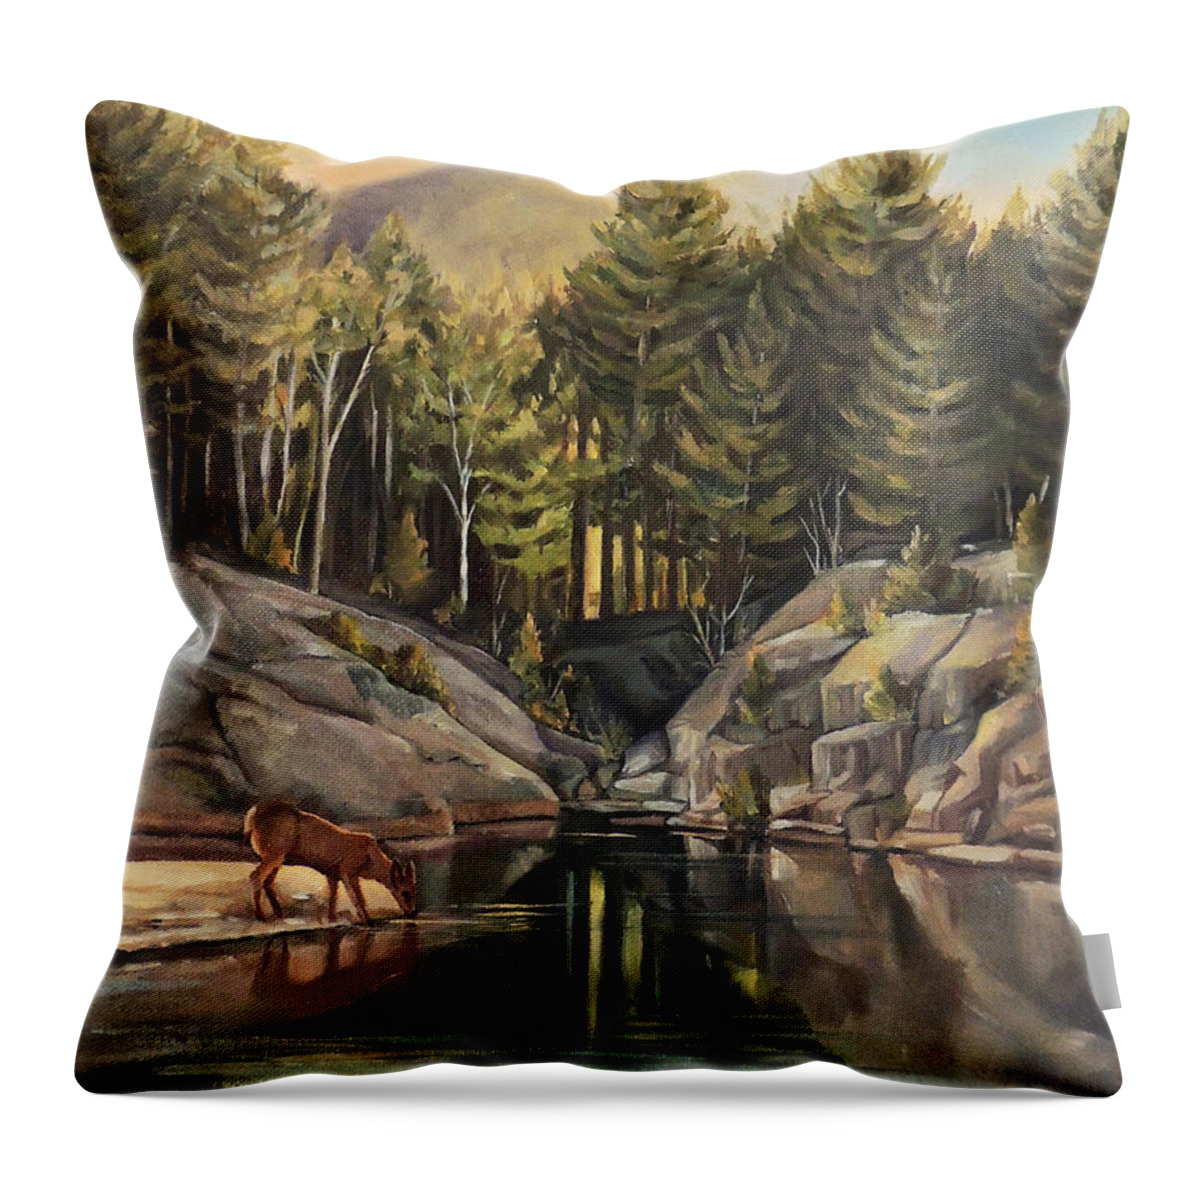 Pemigewasset River Throw Pillow featuring the painting Down by the Pemigewasset River by Nancy Griswold